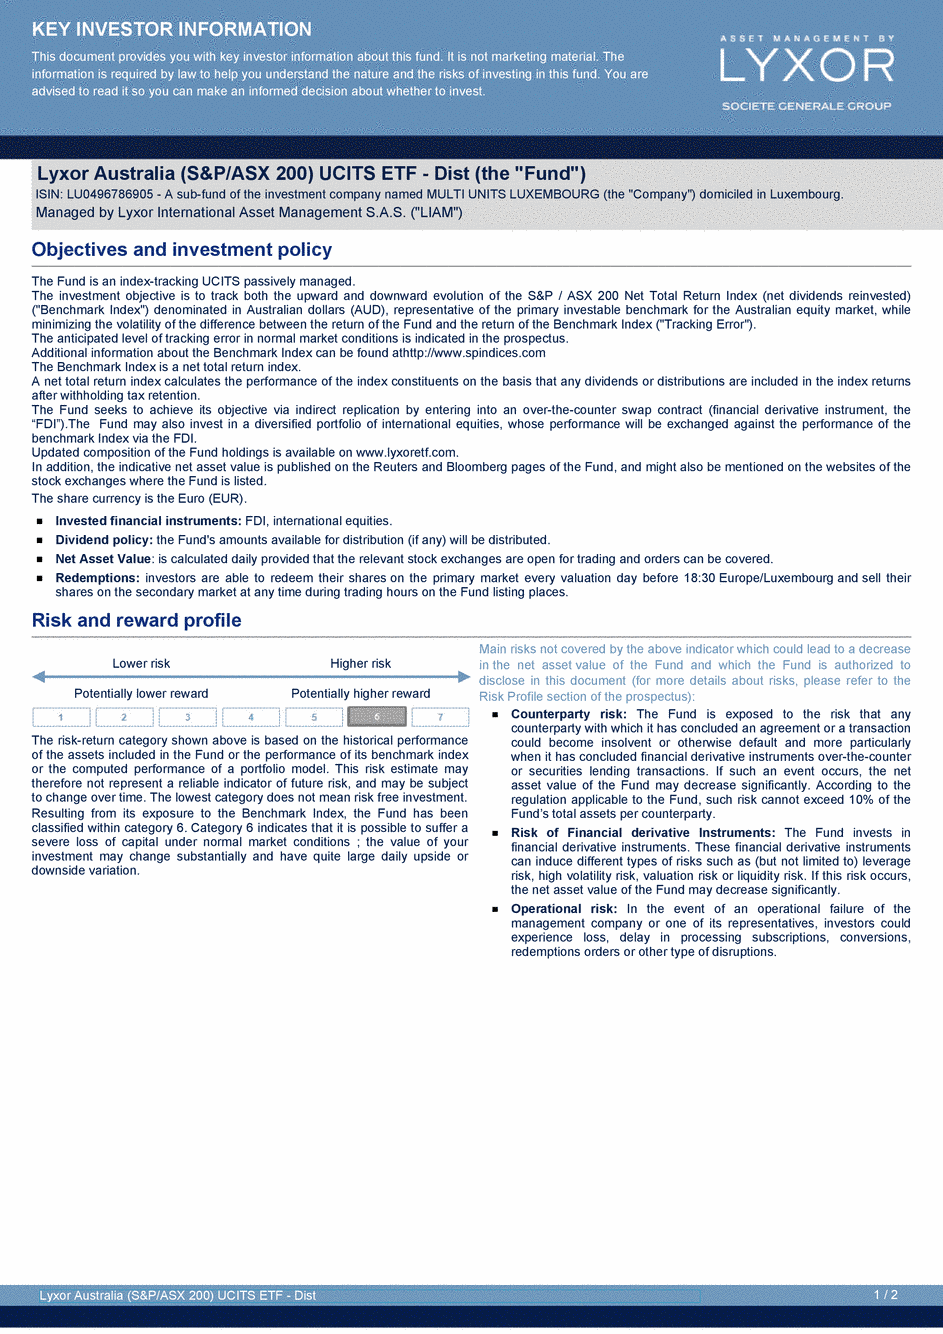 DICI Lyxor Australia (S&P/ASX 200) UCITS ETF - Dist - 19/02/2021 - Anglais